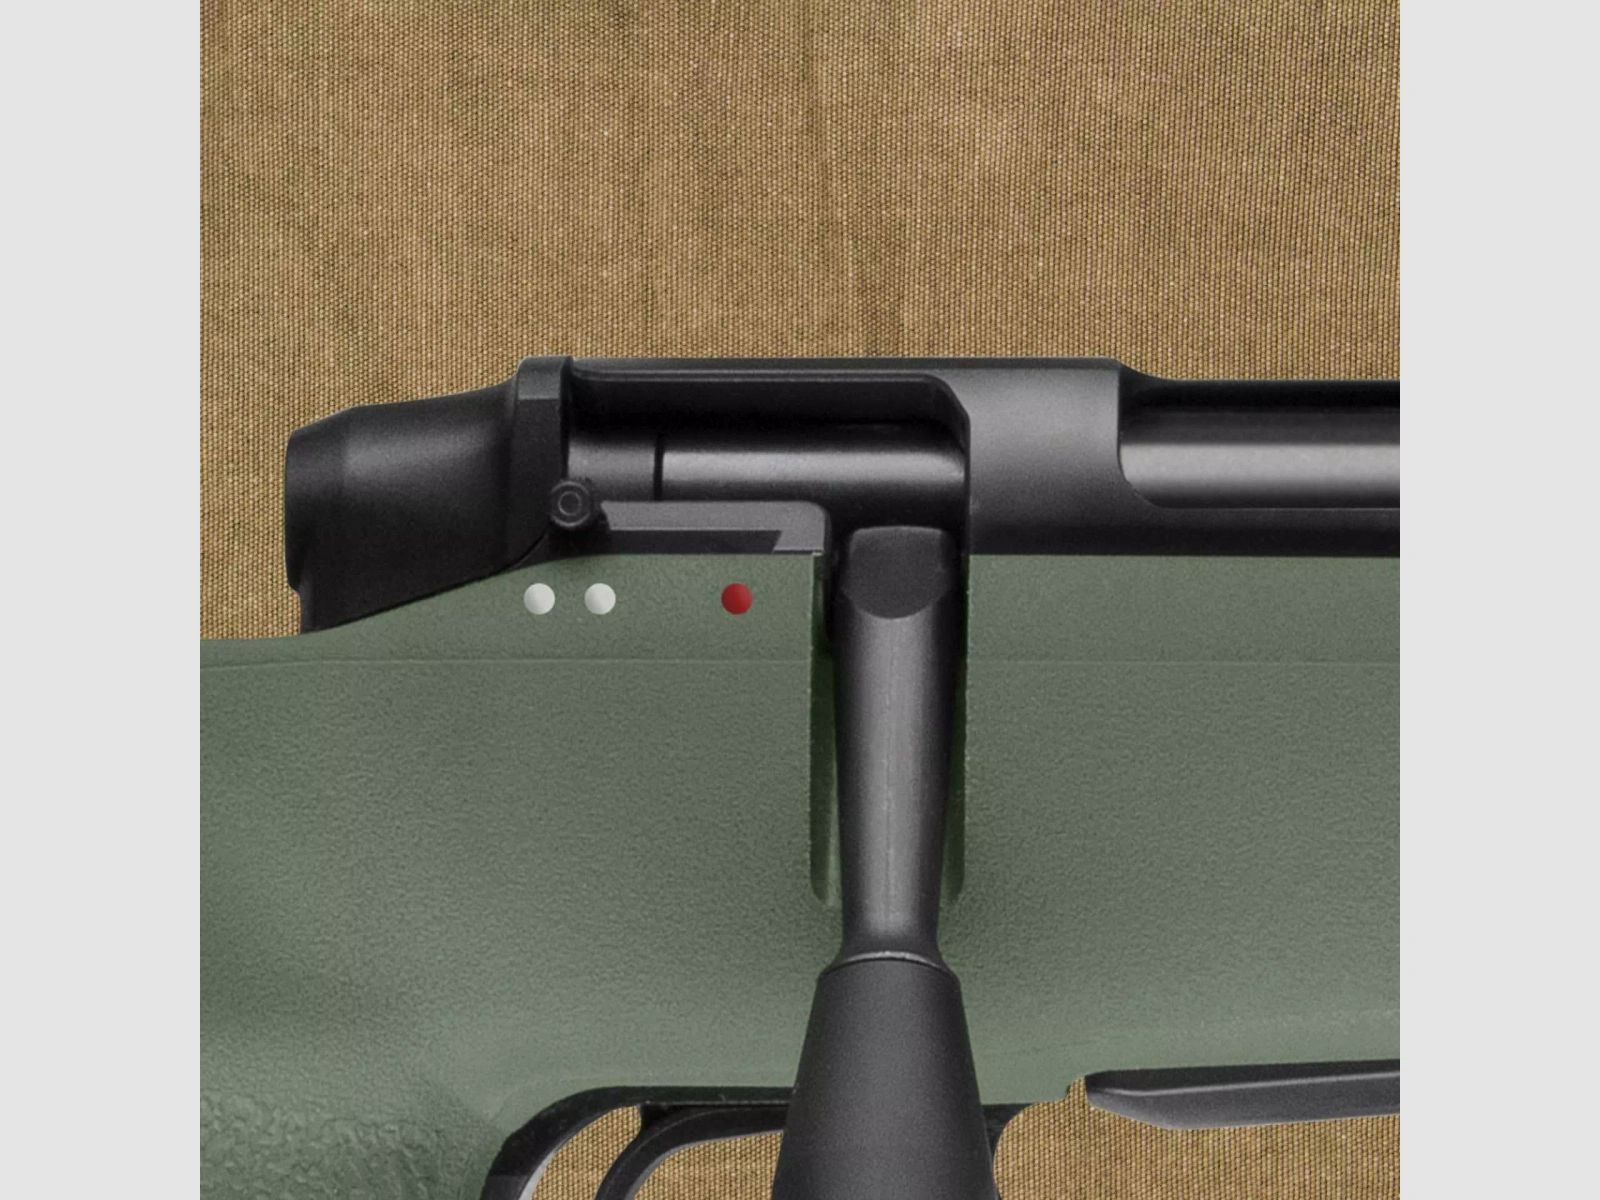 Mauser M18 Fenris